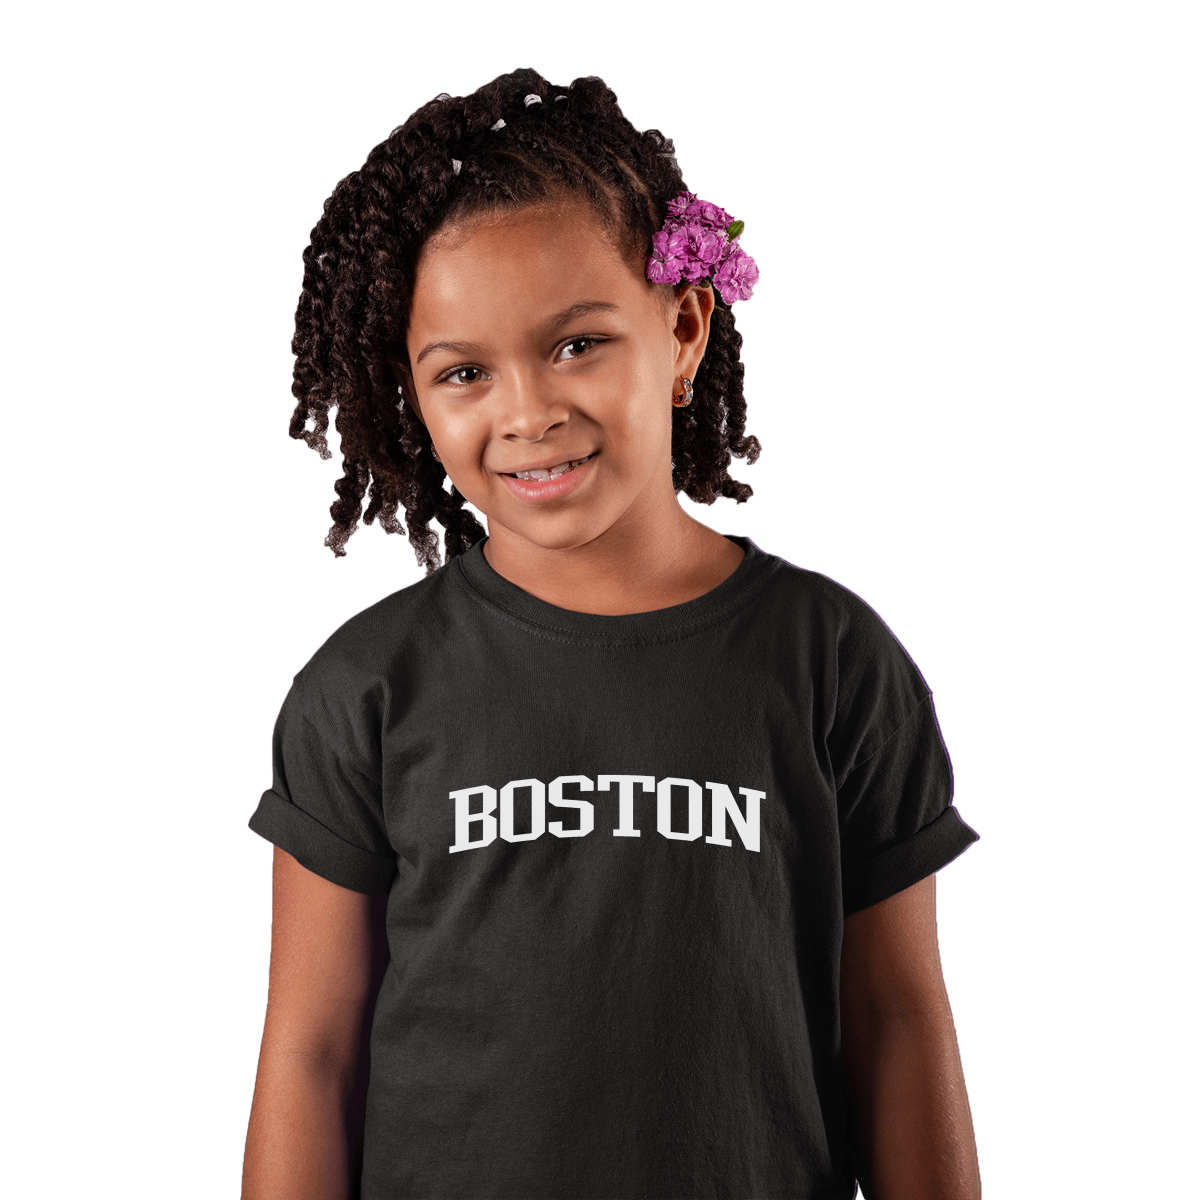 Boston Kids T-shirt | Black